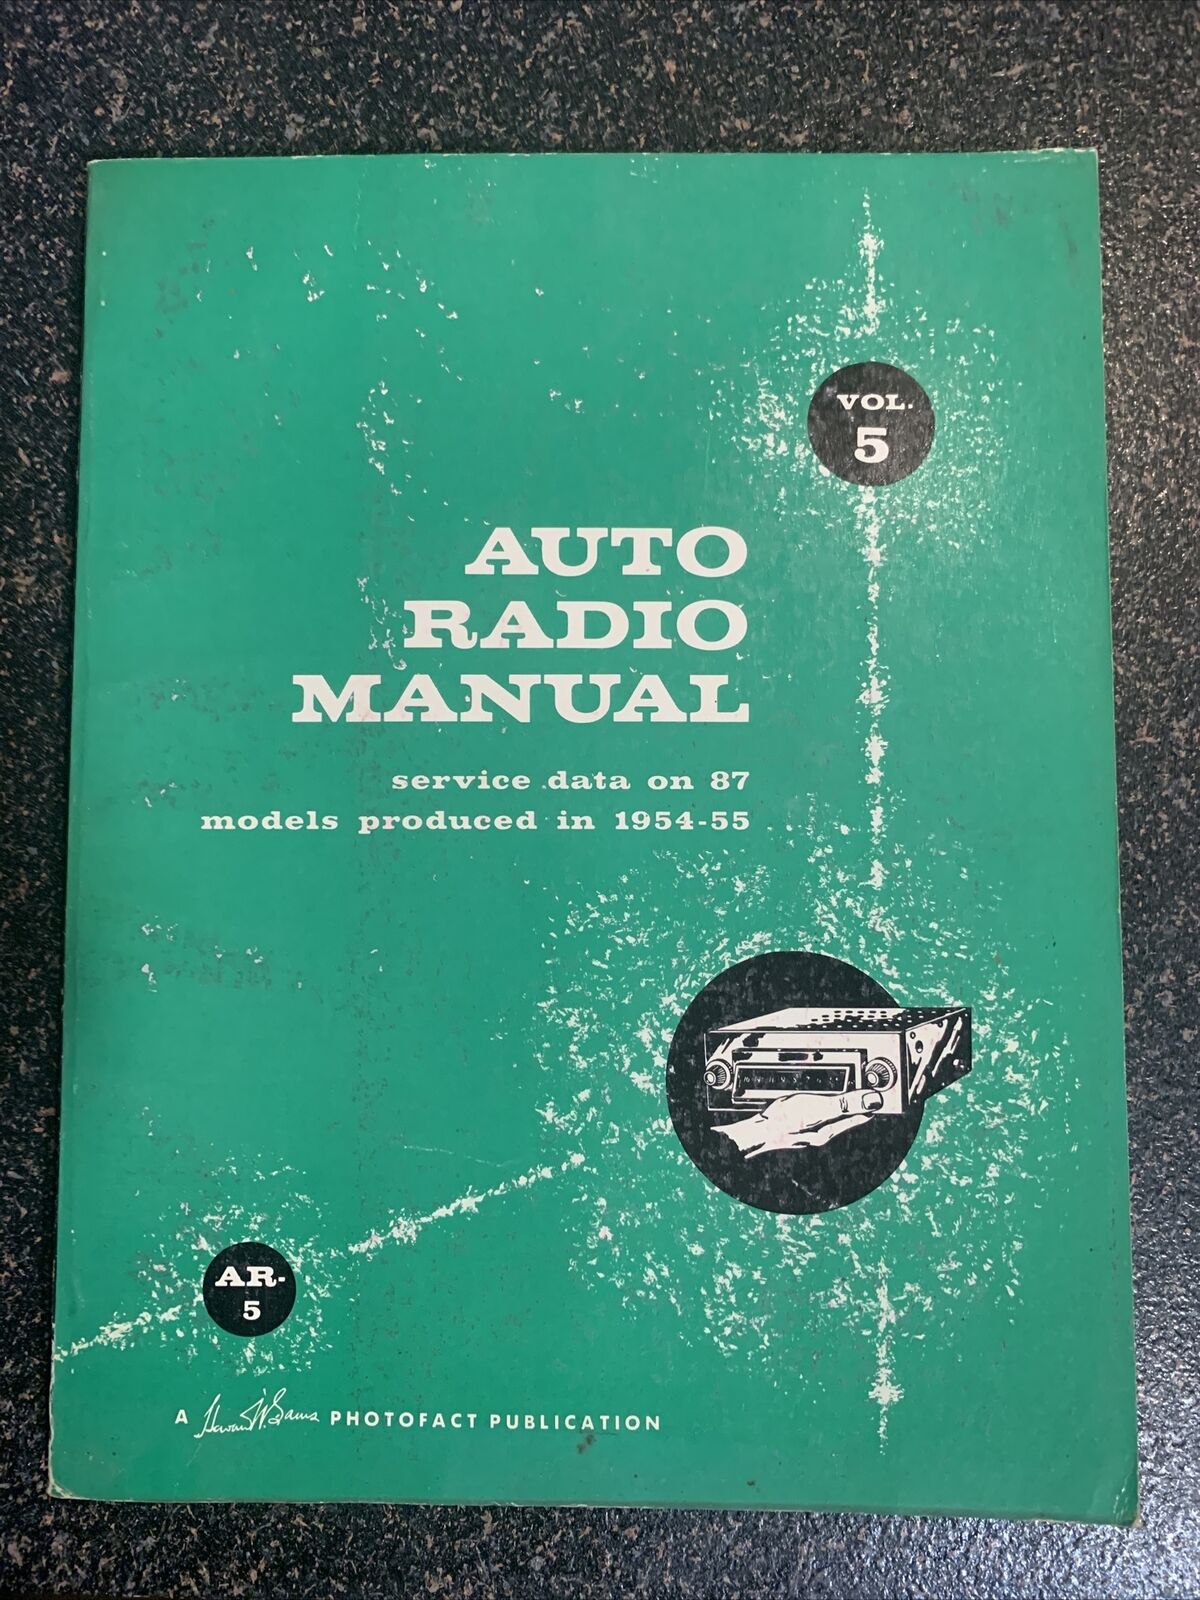 Vintage 1954 To 1955 Auto Radio Manual Vol 5-Photofact Publication